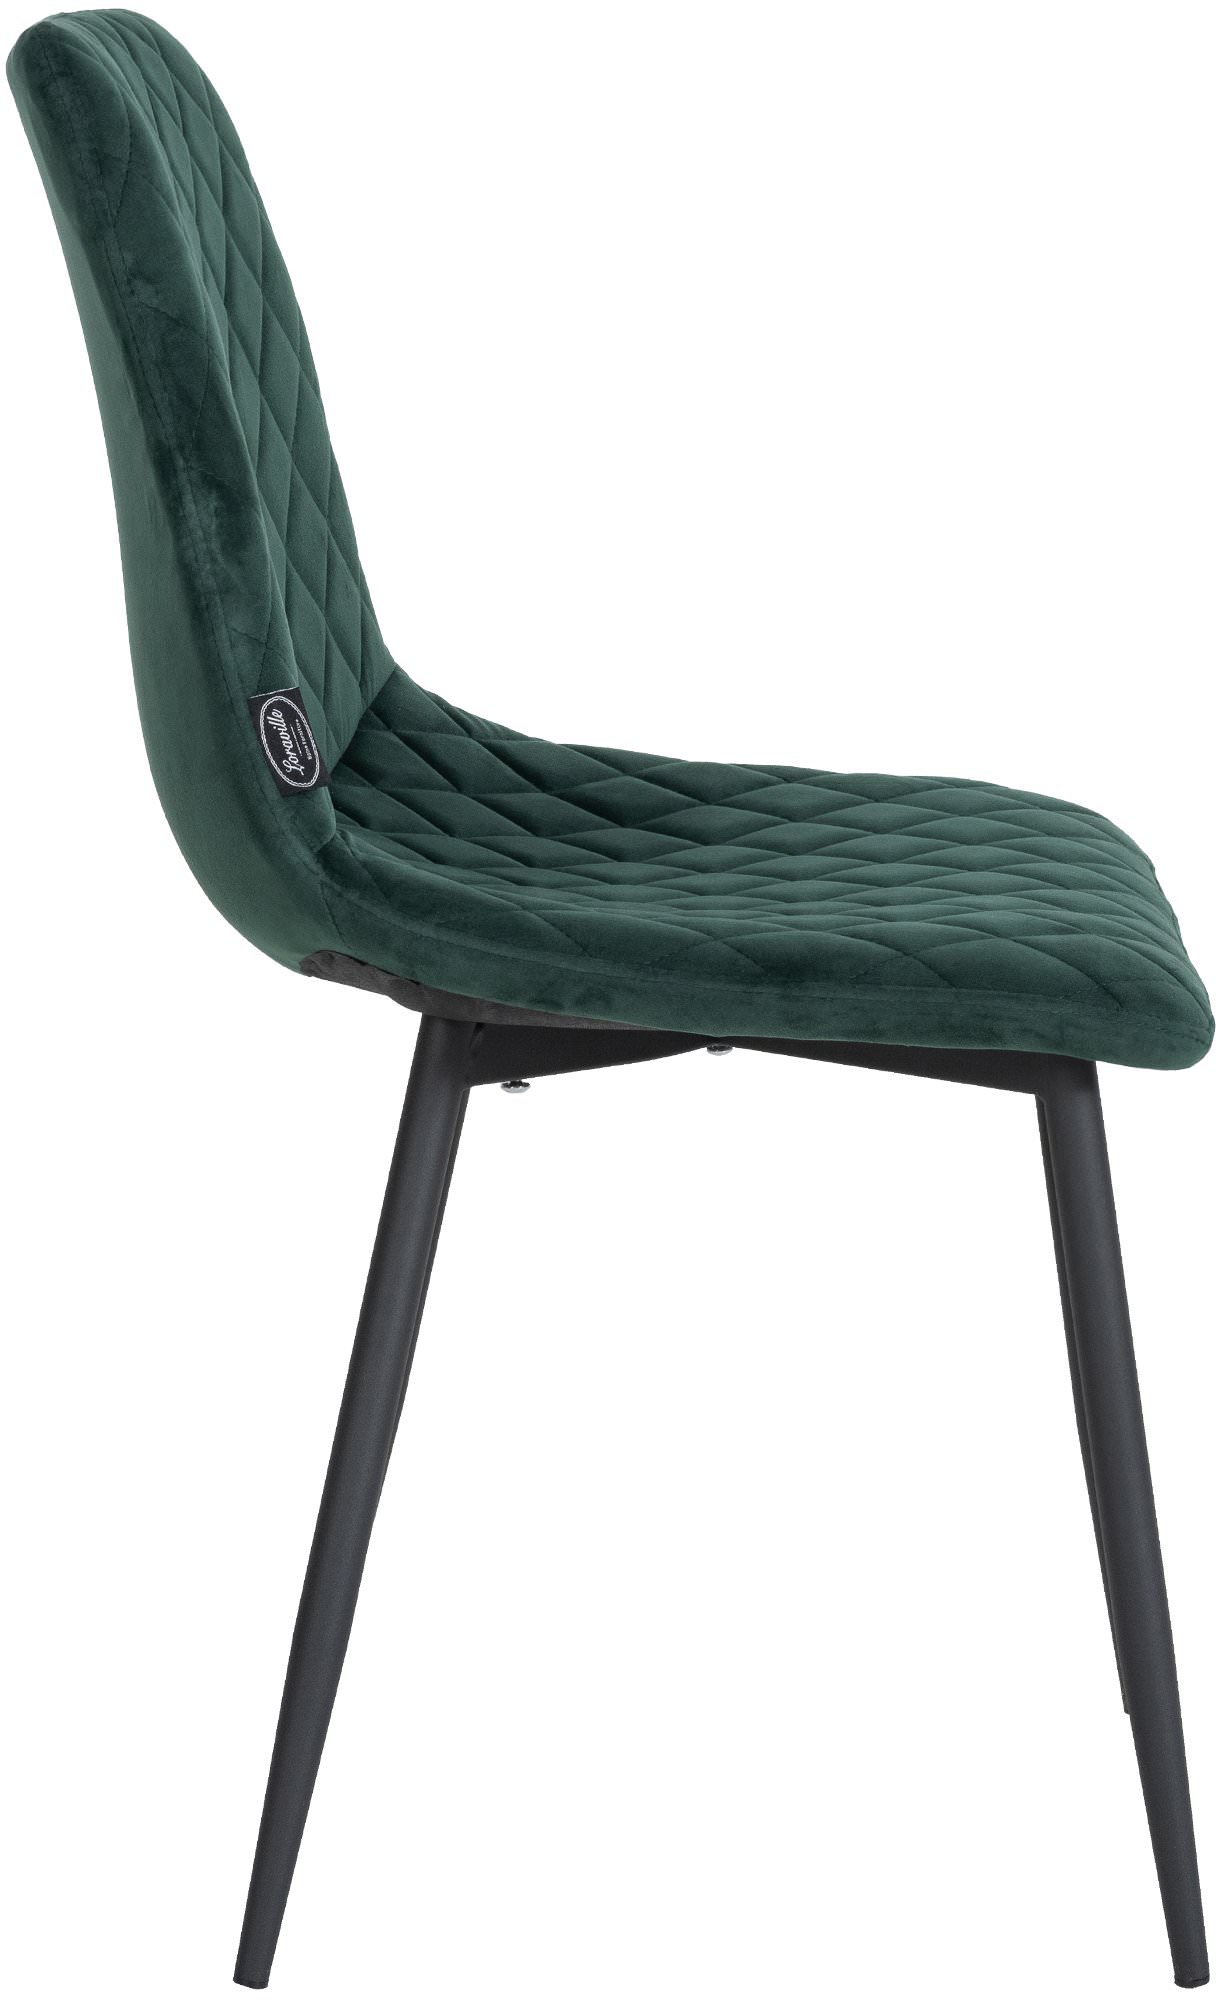 4er Set Stühle Telde Samt dunkelgrün